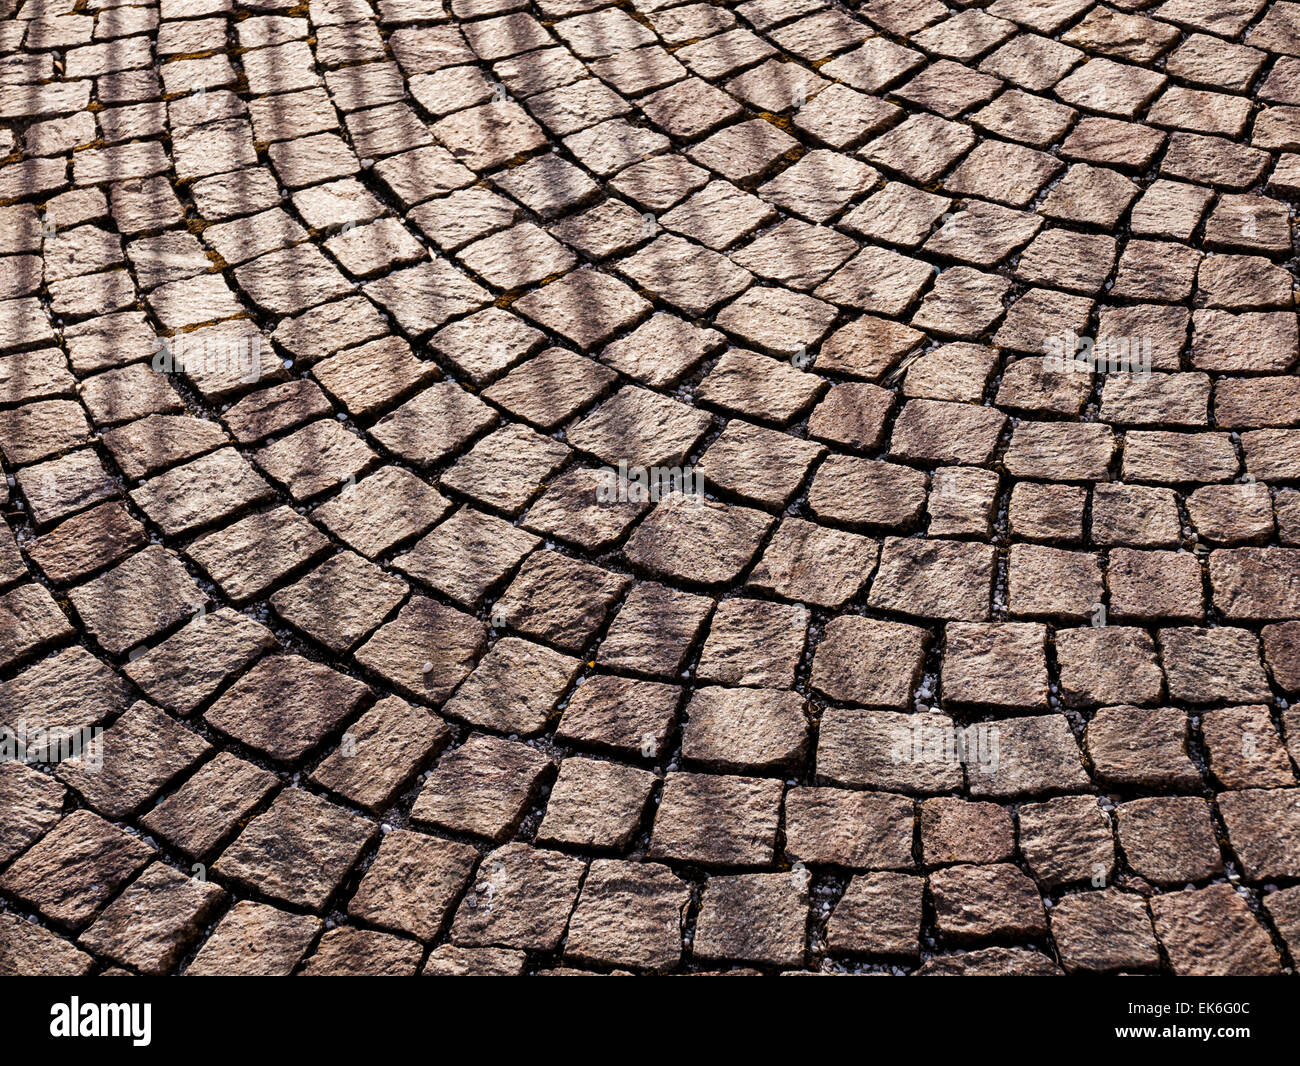 Cobblestones arranged in pattern, village of Fornesighe, northern Italy Stock Photo